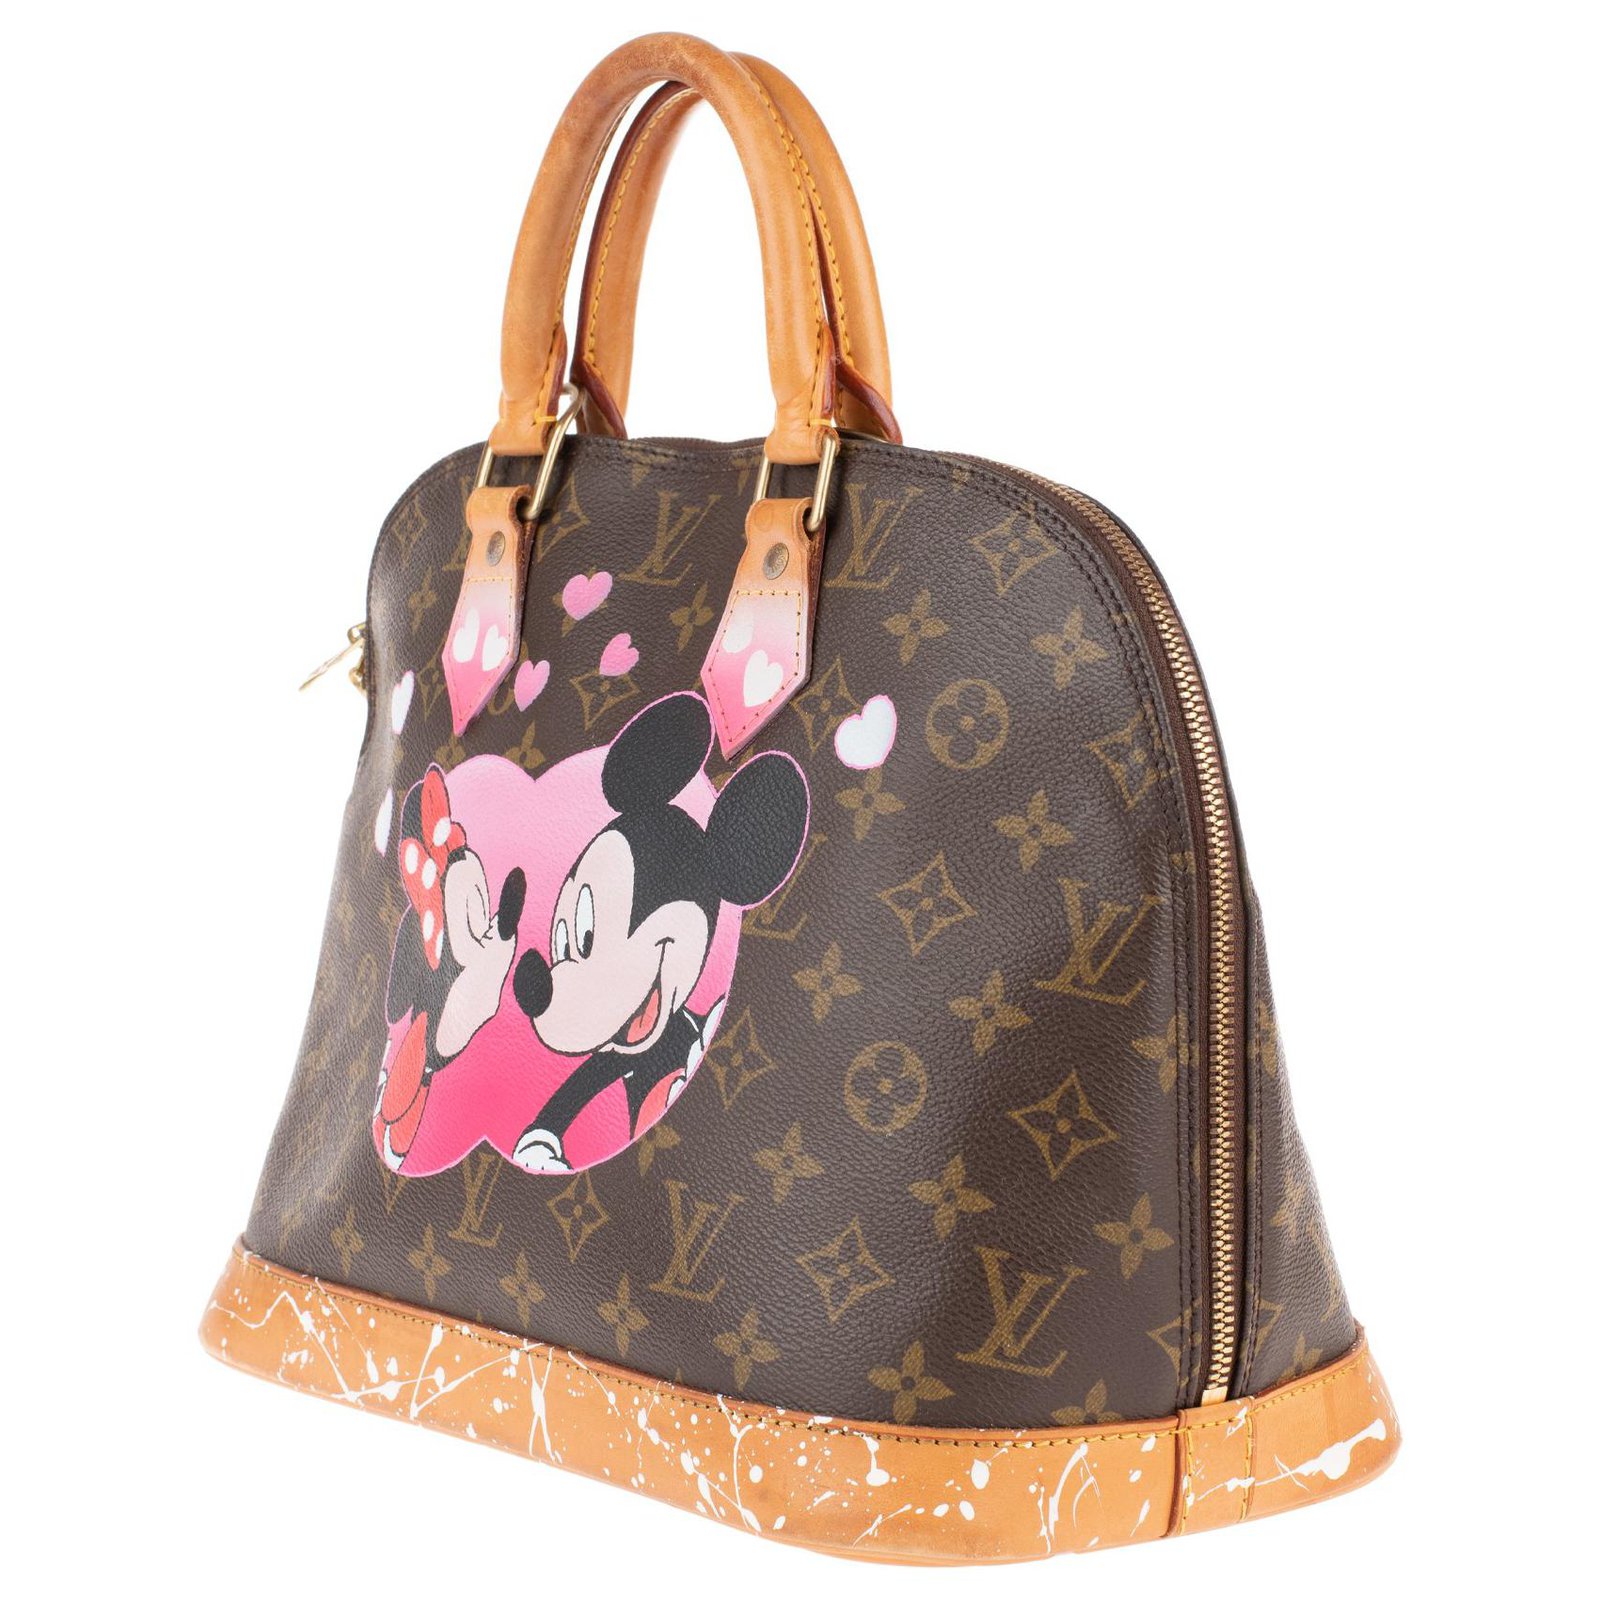 Louis Vuitton Alma Minnie & Mickey customized by artist PAtBo